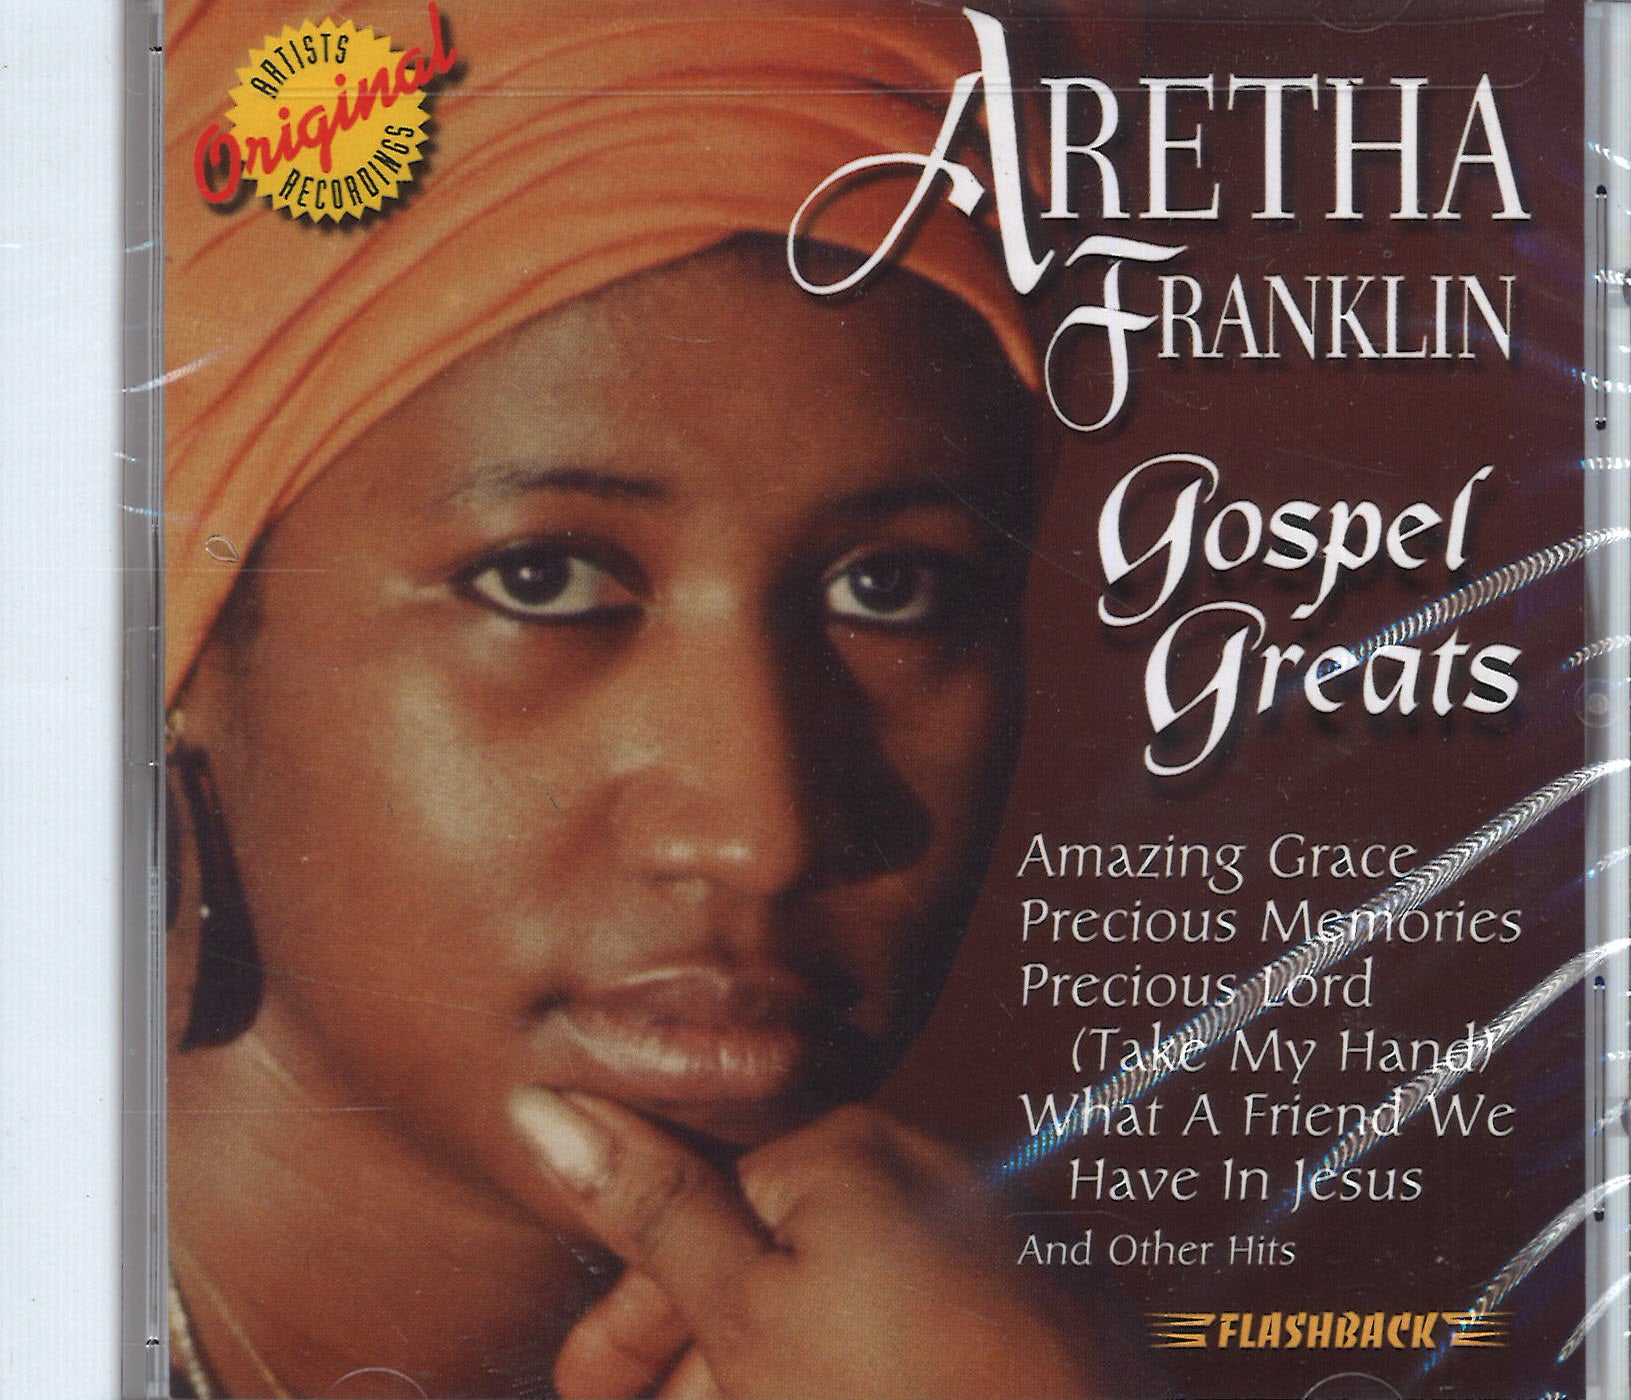 Aretha Franklin Gospel Greats